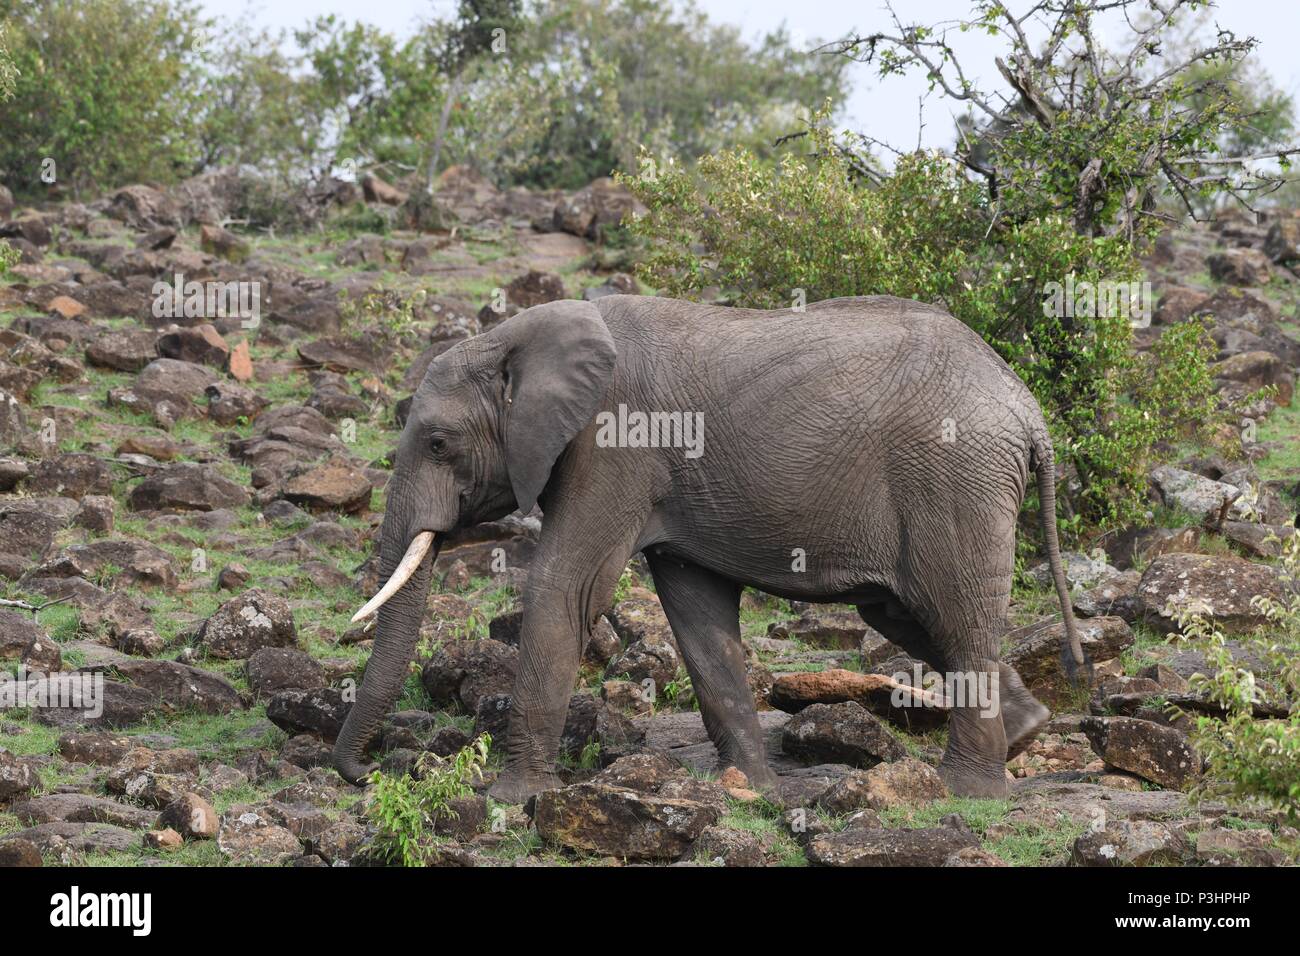 Herd of elephants at Mahali Mzuri in the Olare Motorogi Conservancy, Maasai Mara, Kenya, East Africa. Genus Loxodonta. Stock Photo